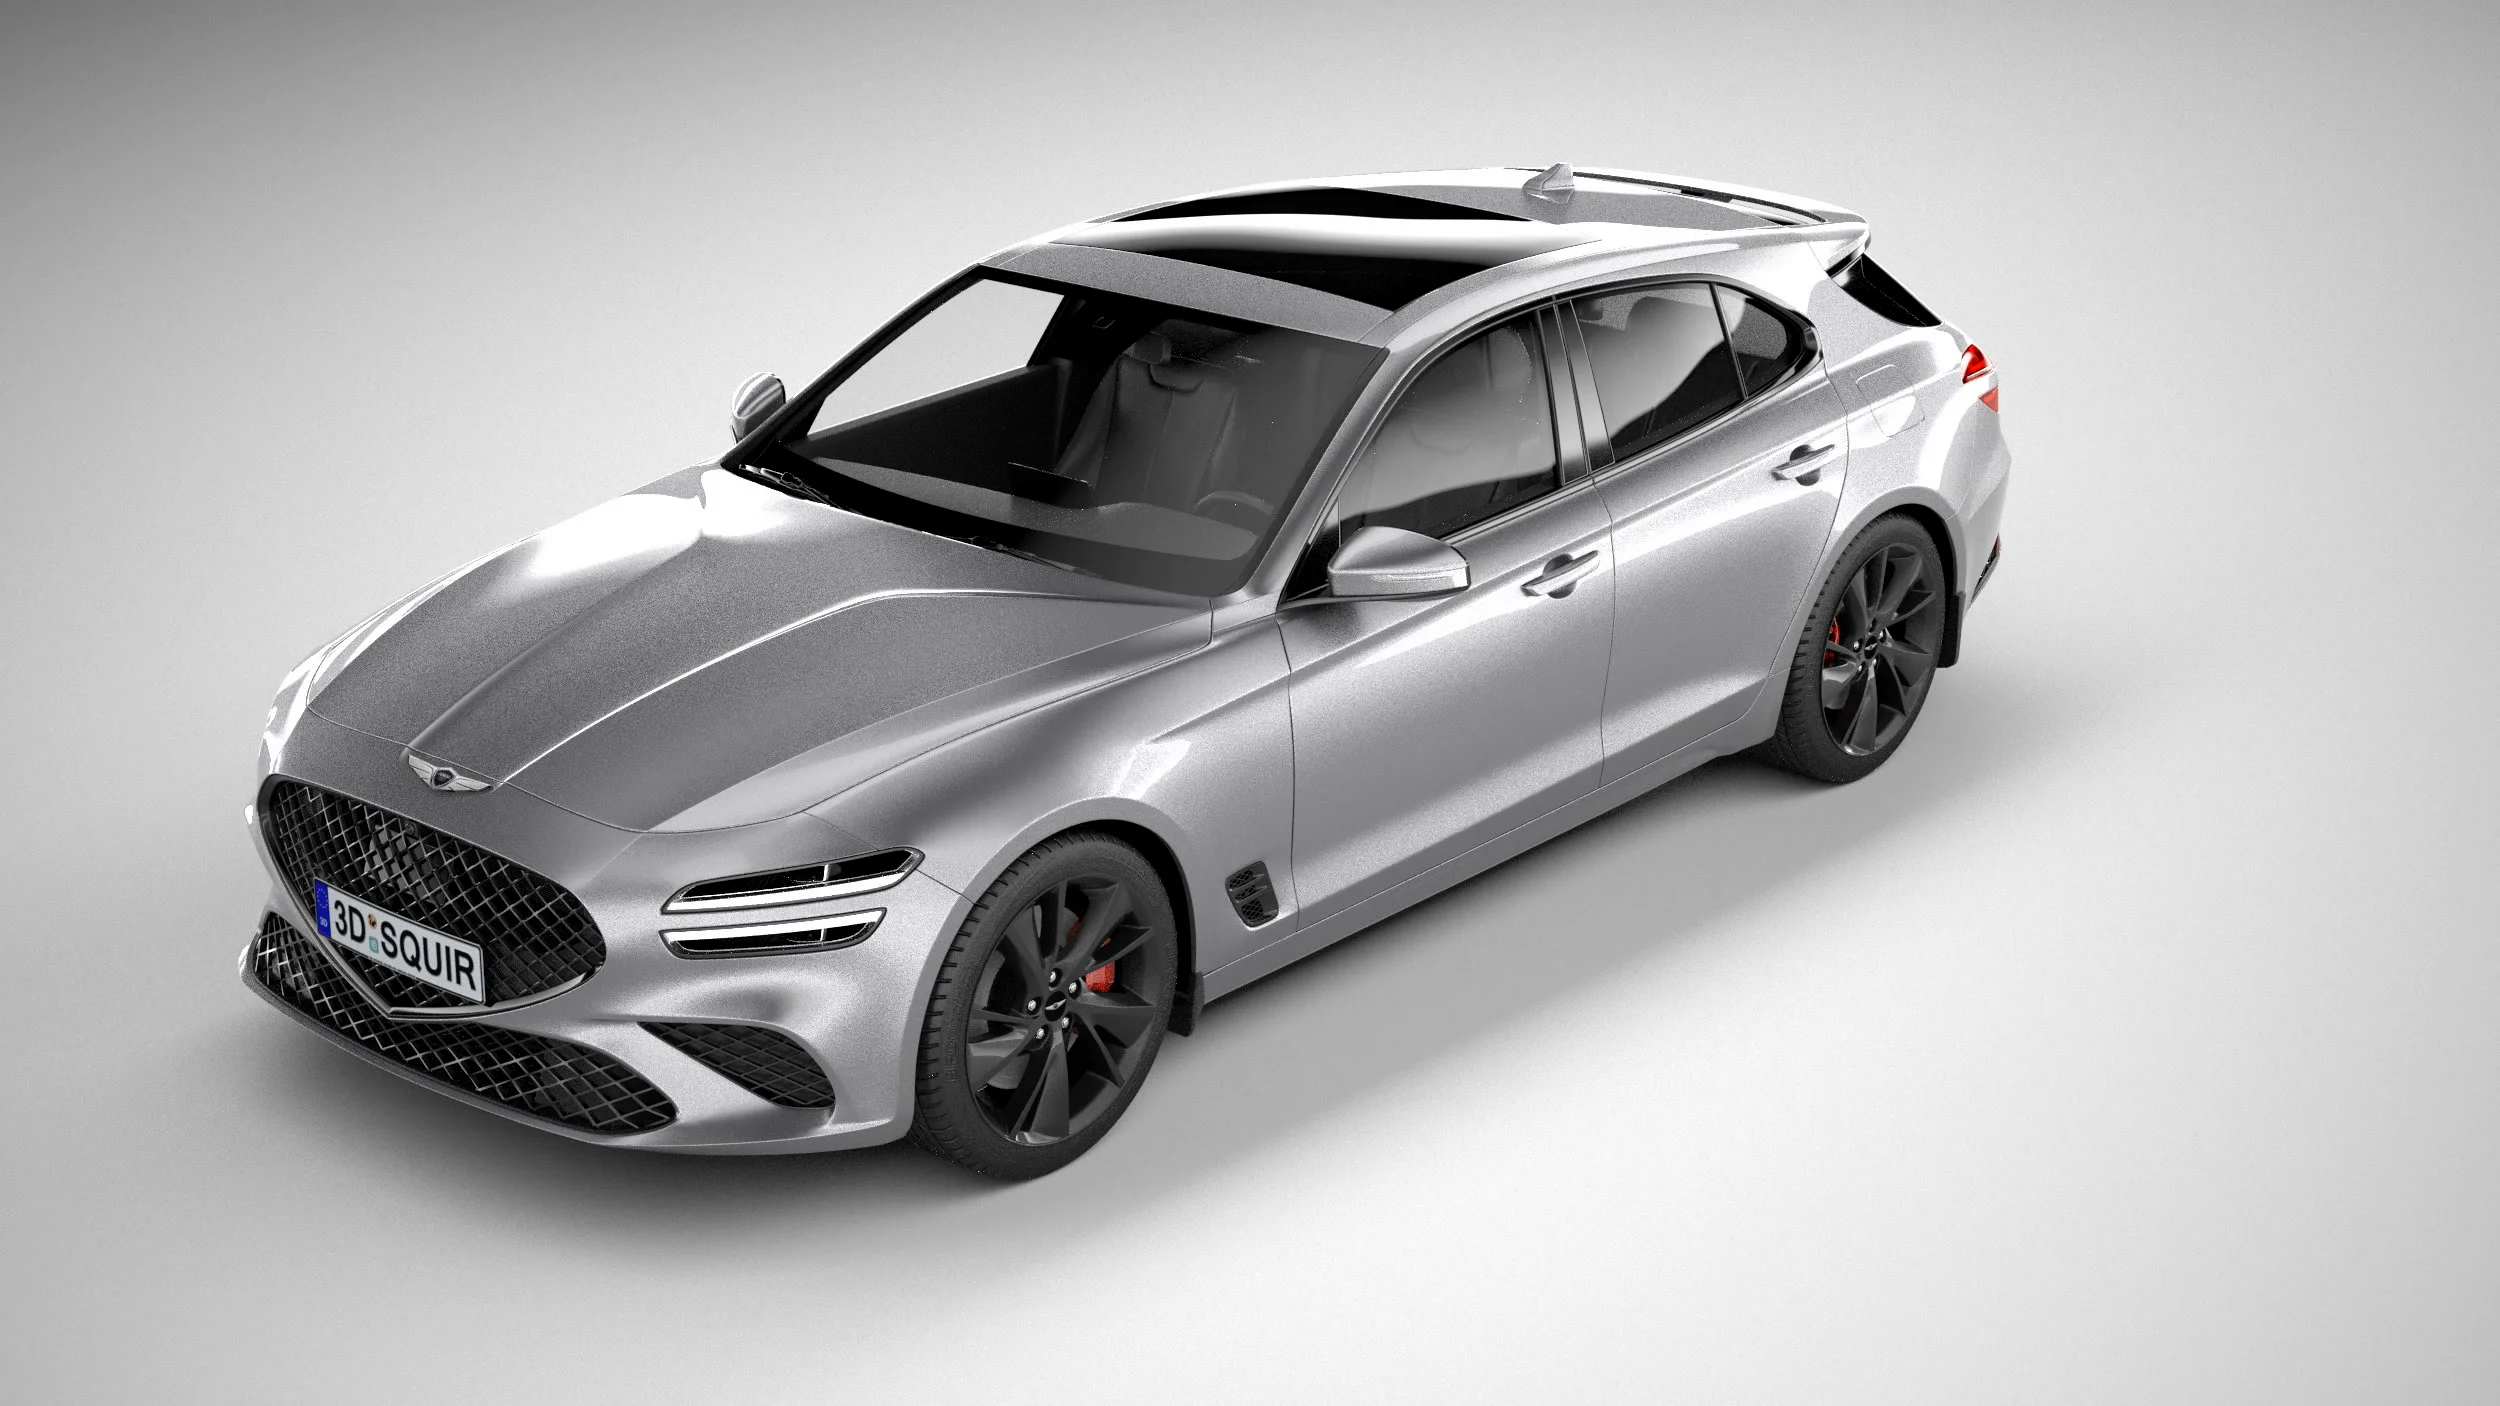 Generic Race Car GT3 2022 - 3D Model by SQUIR